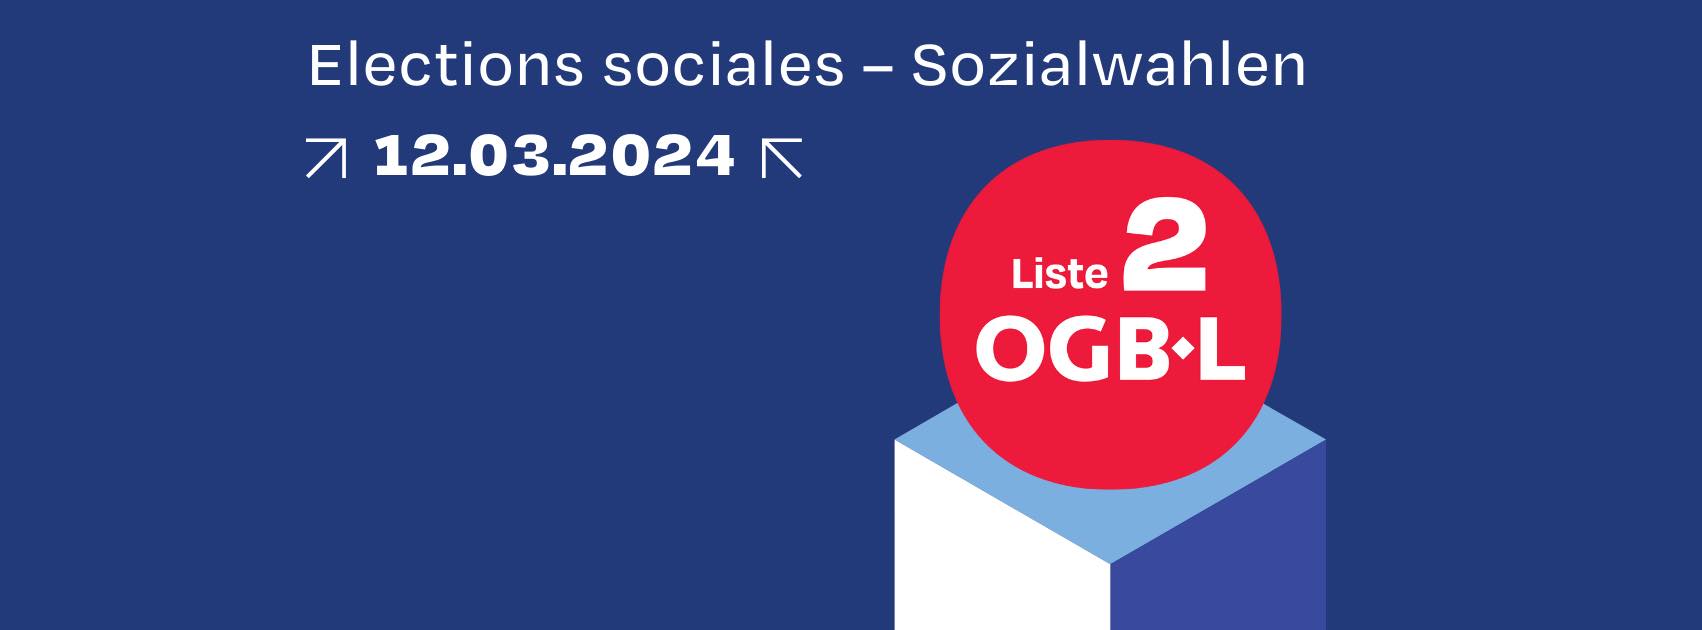 Sozialwahlen OGBL März 2024